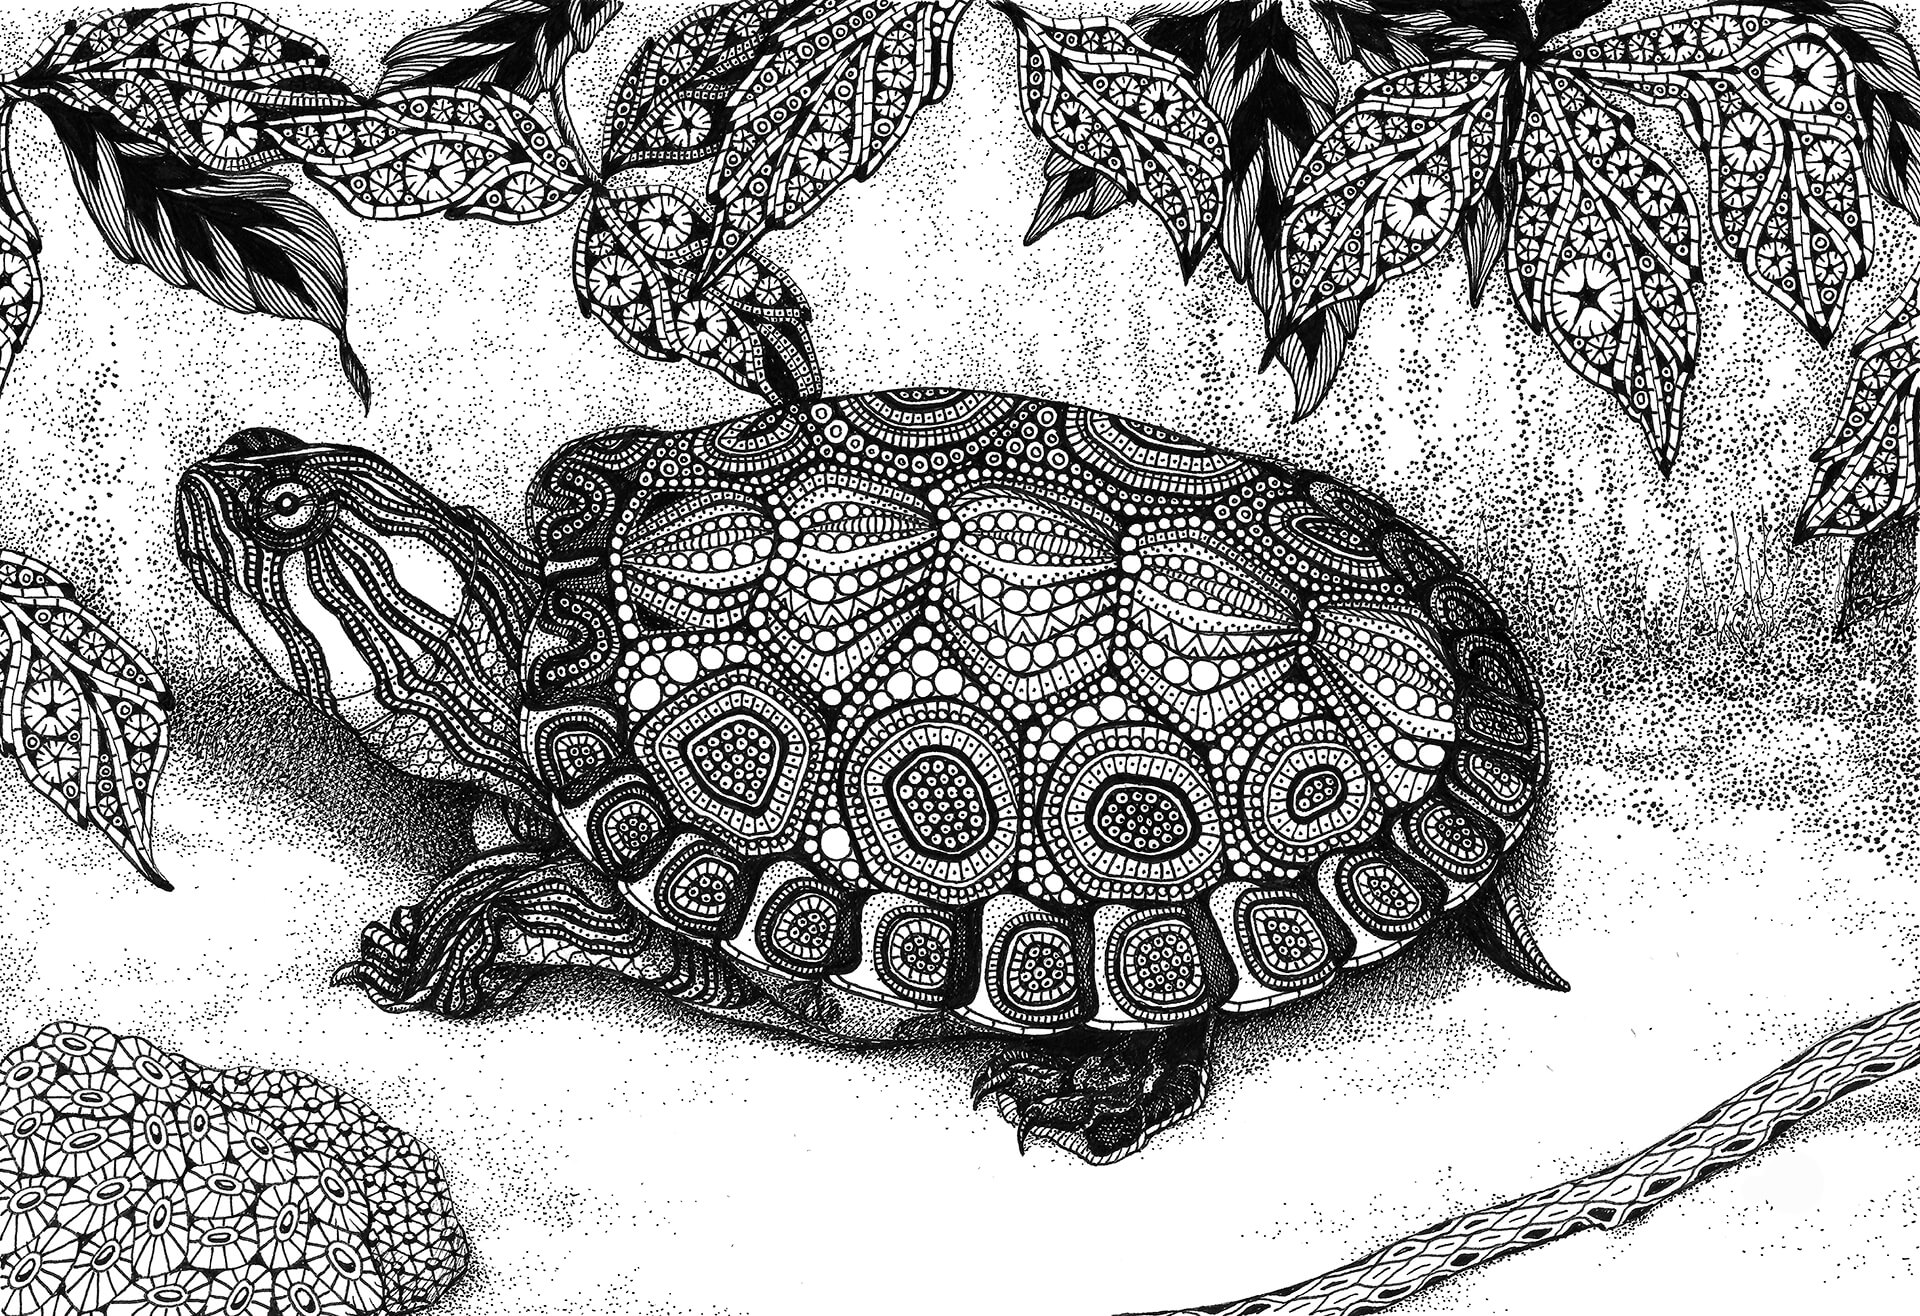 MELANGE "Seriously Fun Art" by Kristin Moger: Wood Turtle, zentagle, hand-drawn, drawing